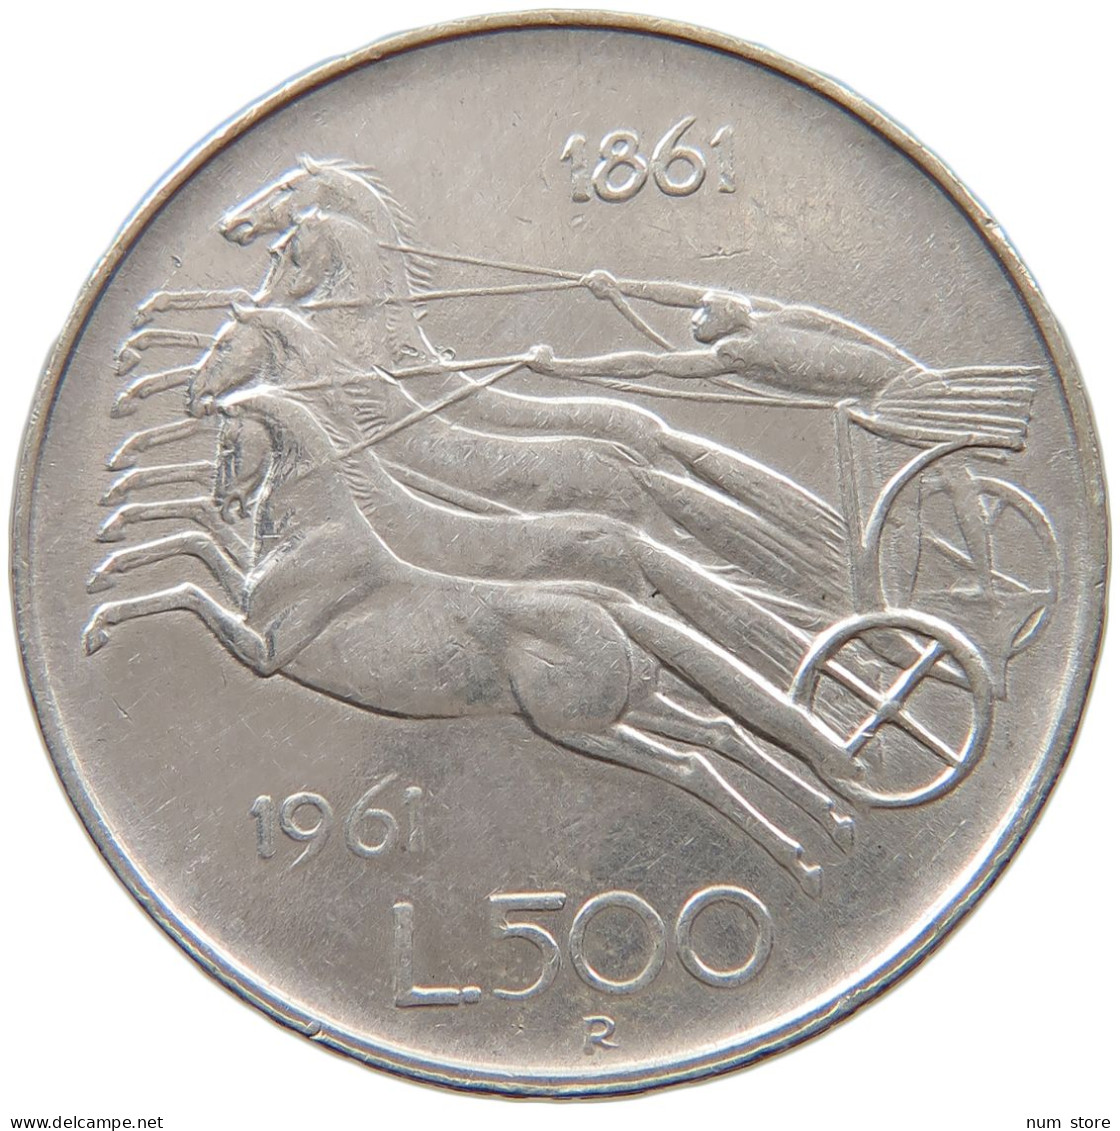 ITALY 500 LIRE 1961  #c068 0349 - 500 Liras